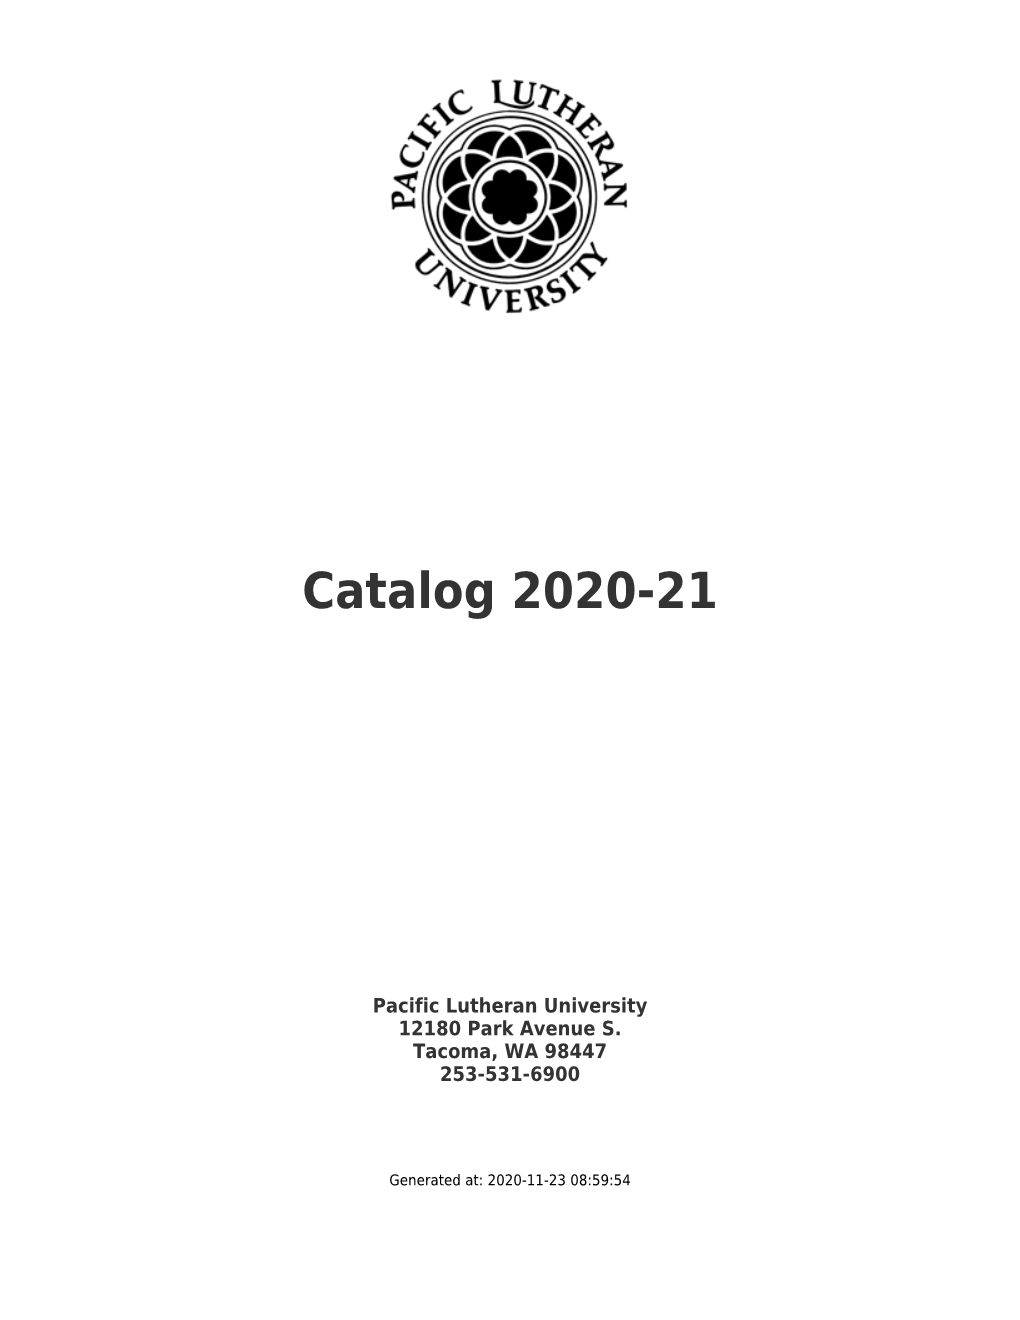 Download Catalog (2020-21)